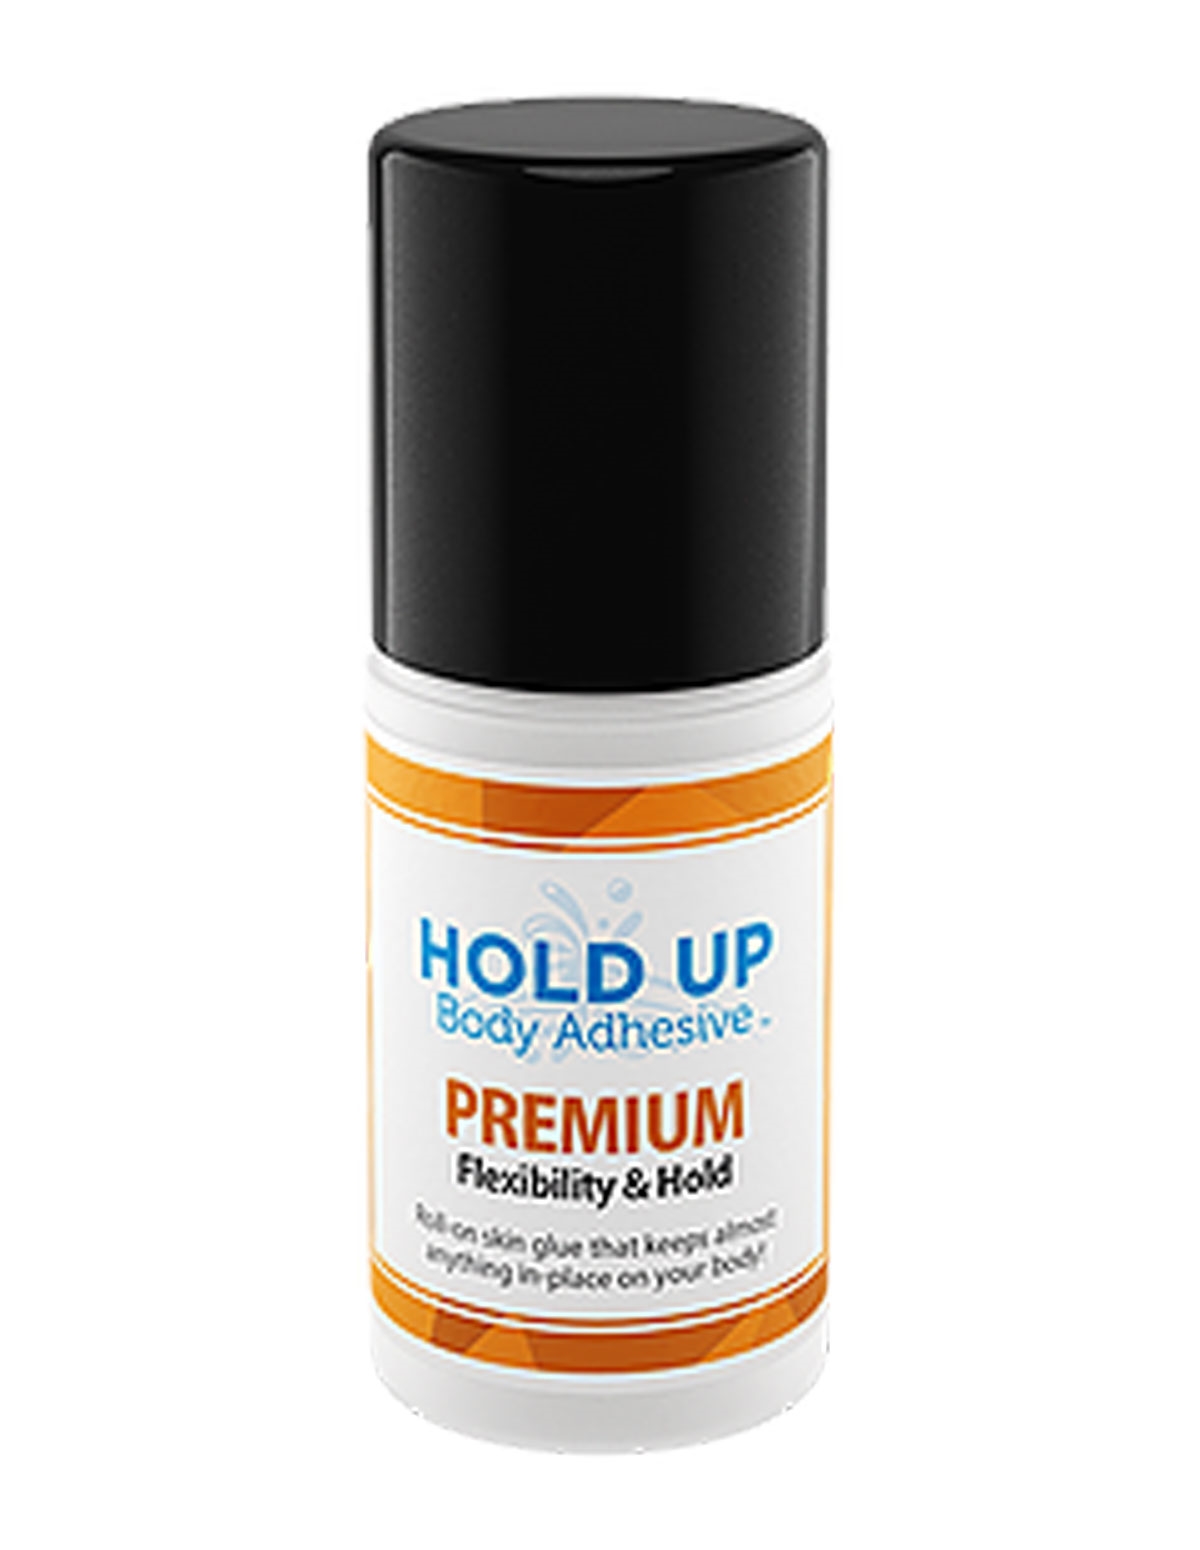 alternate image for Hold Up Body Adhesive - Premium